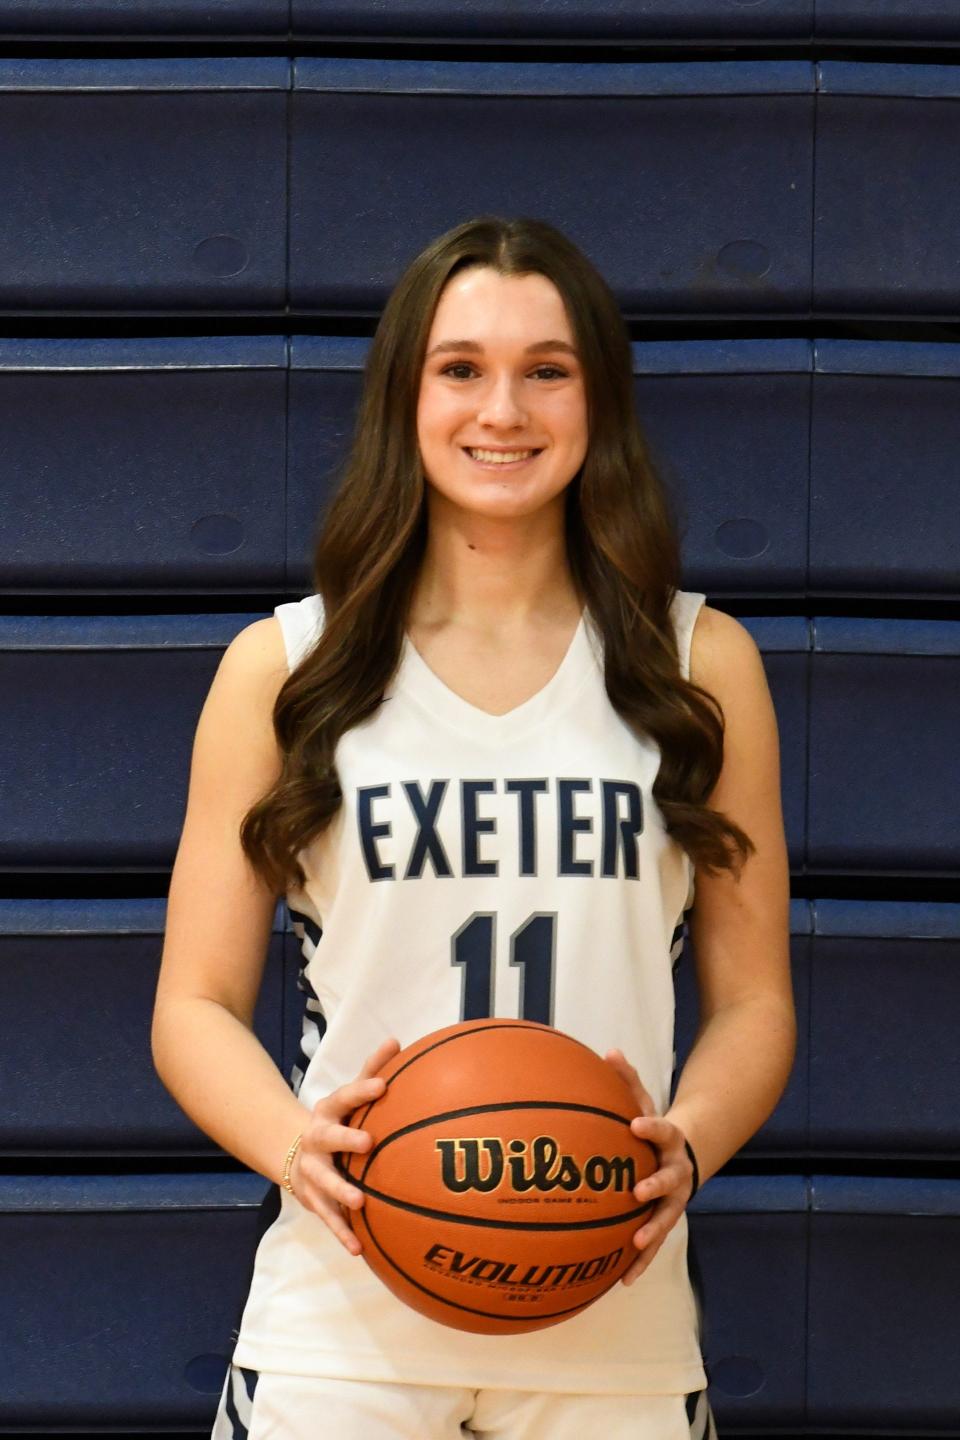 Exeter High School basketball player Anna McGuinness